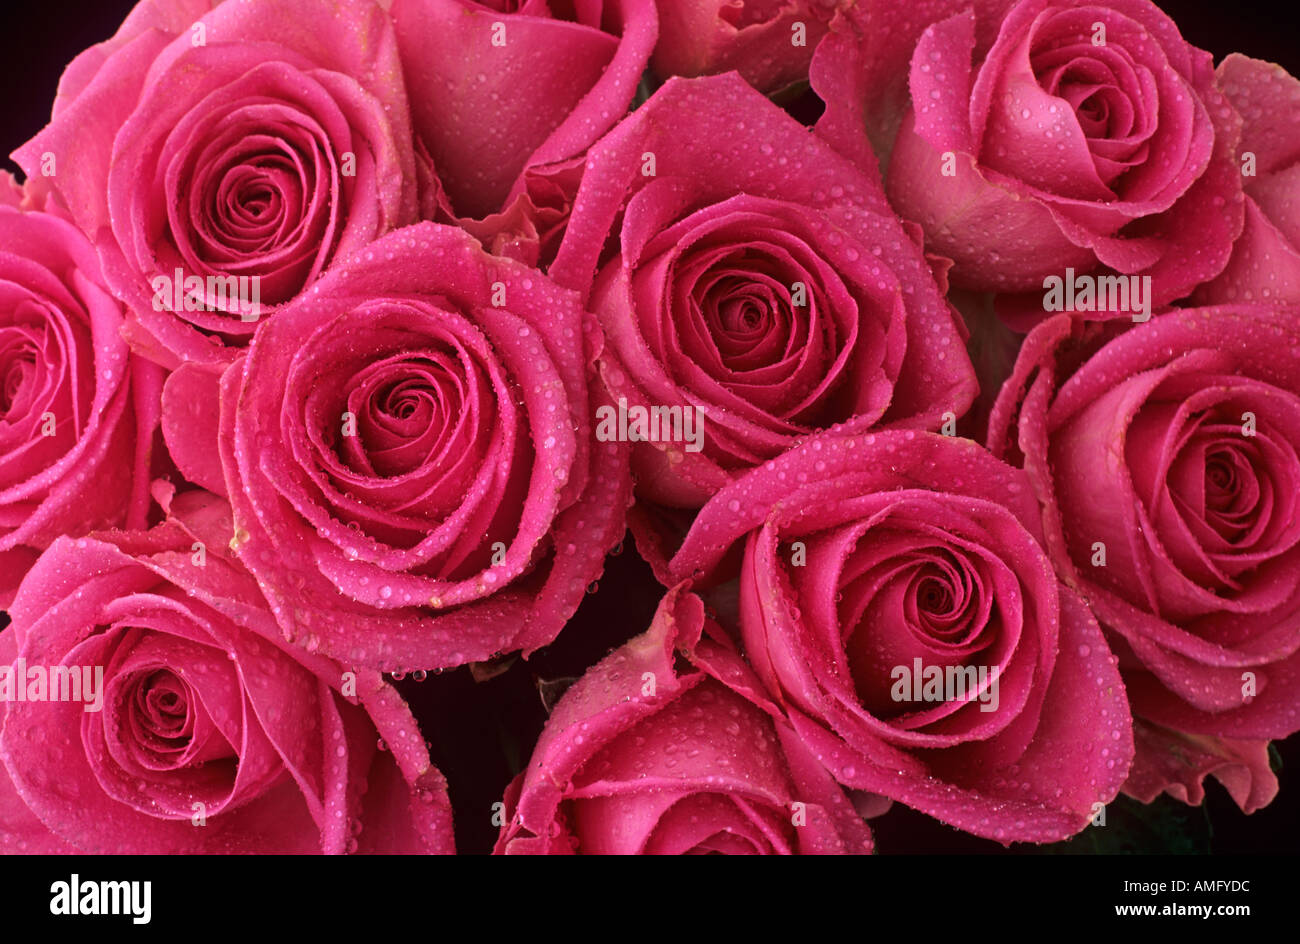 Enviar flores fotografías e imágenes de alta resolución - Alamy